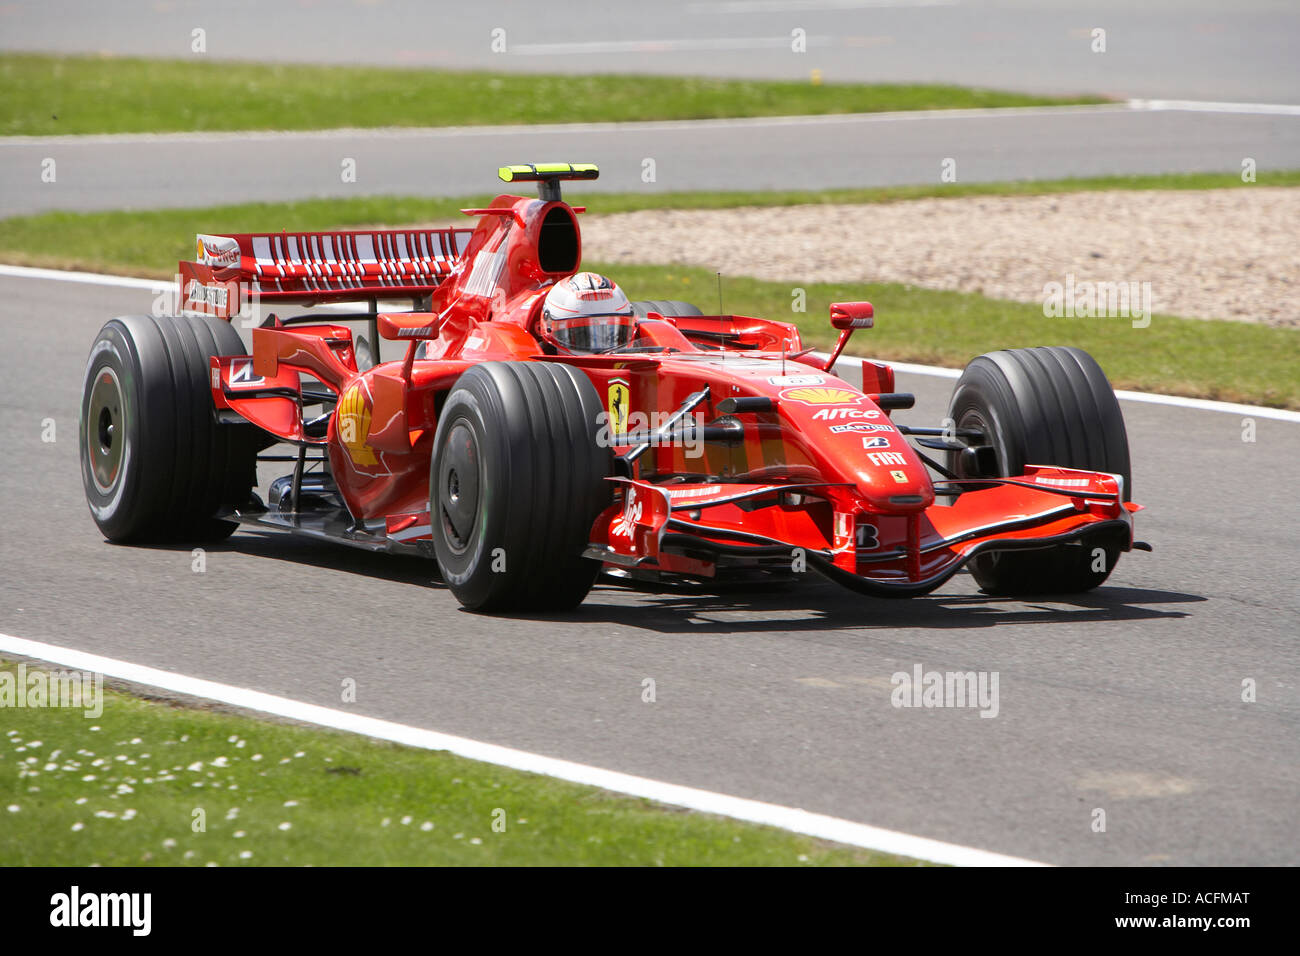 Kimi Raikkonen driving his Ferrari into first place at the British Grand Prix 2007 Stock Photo